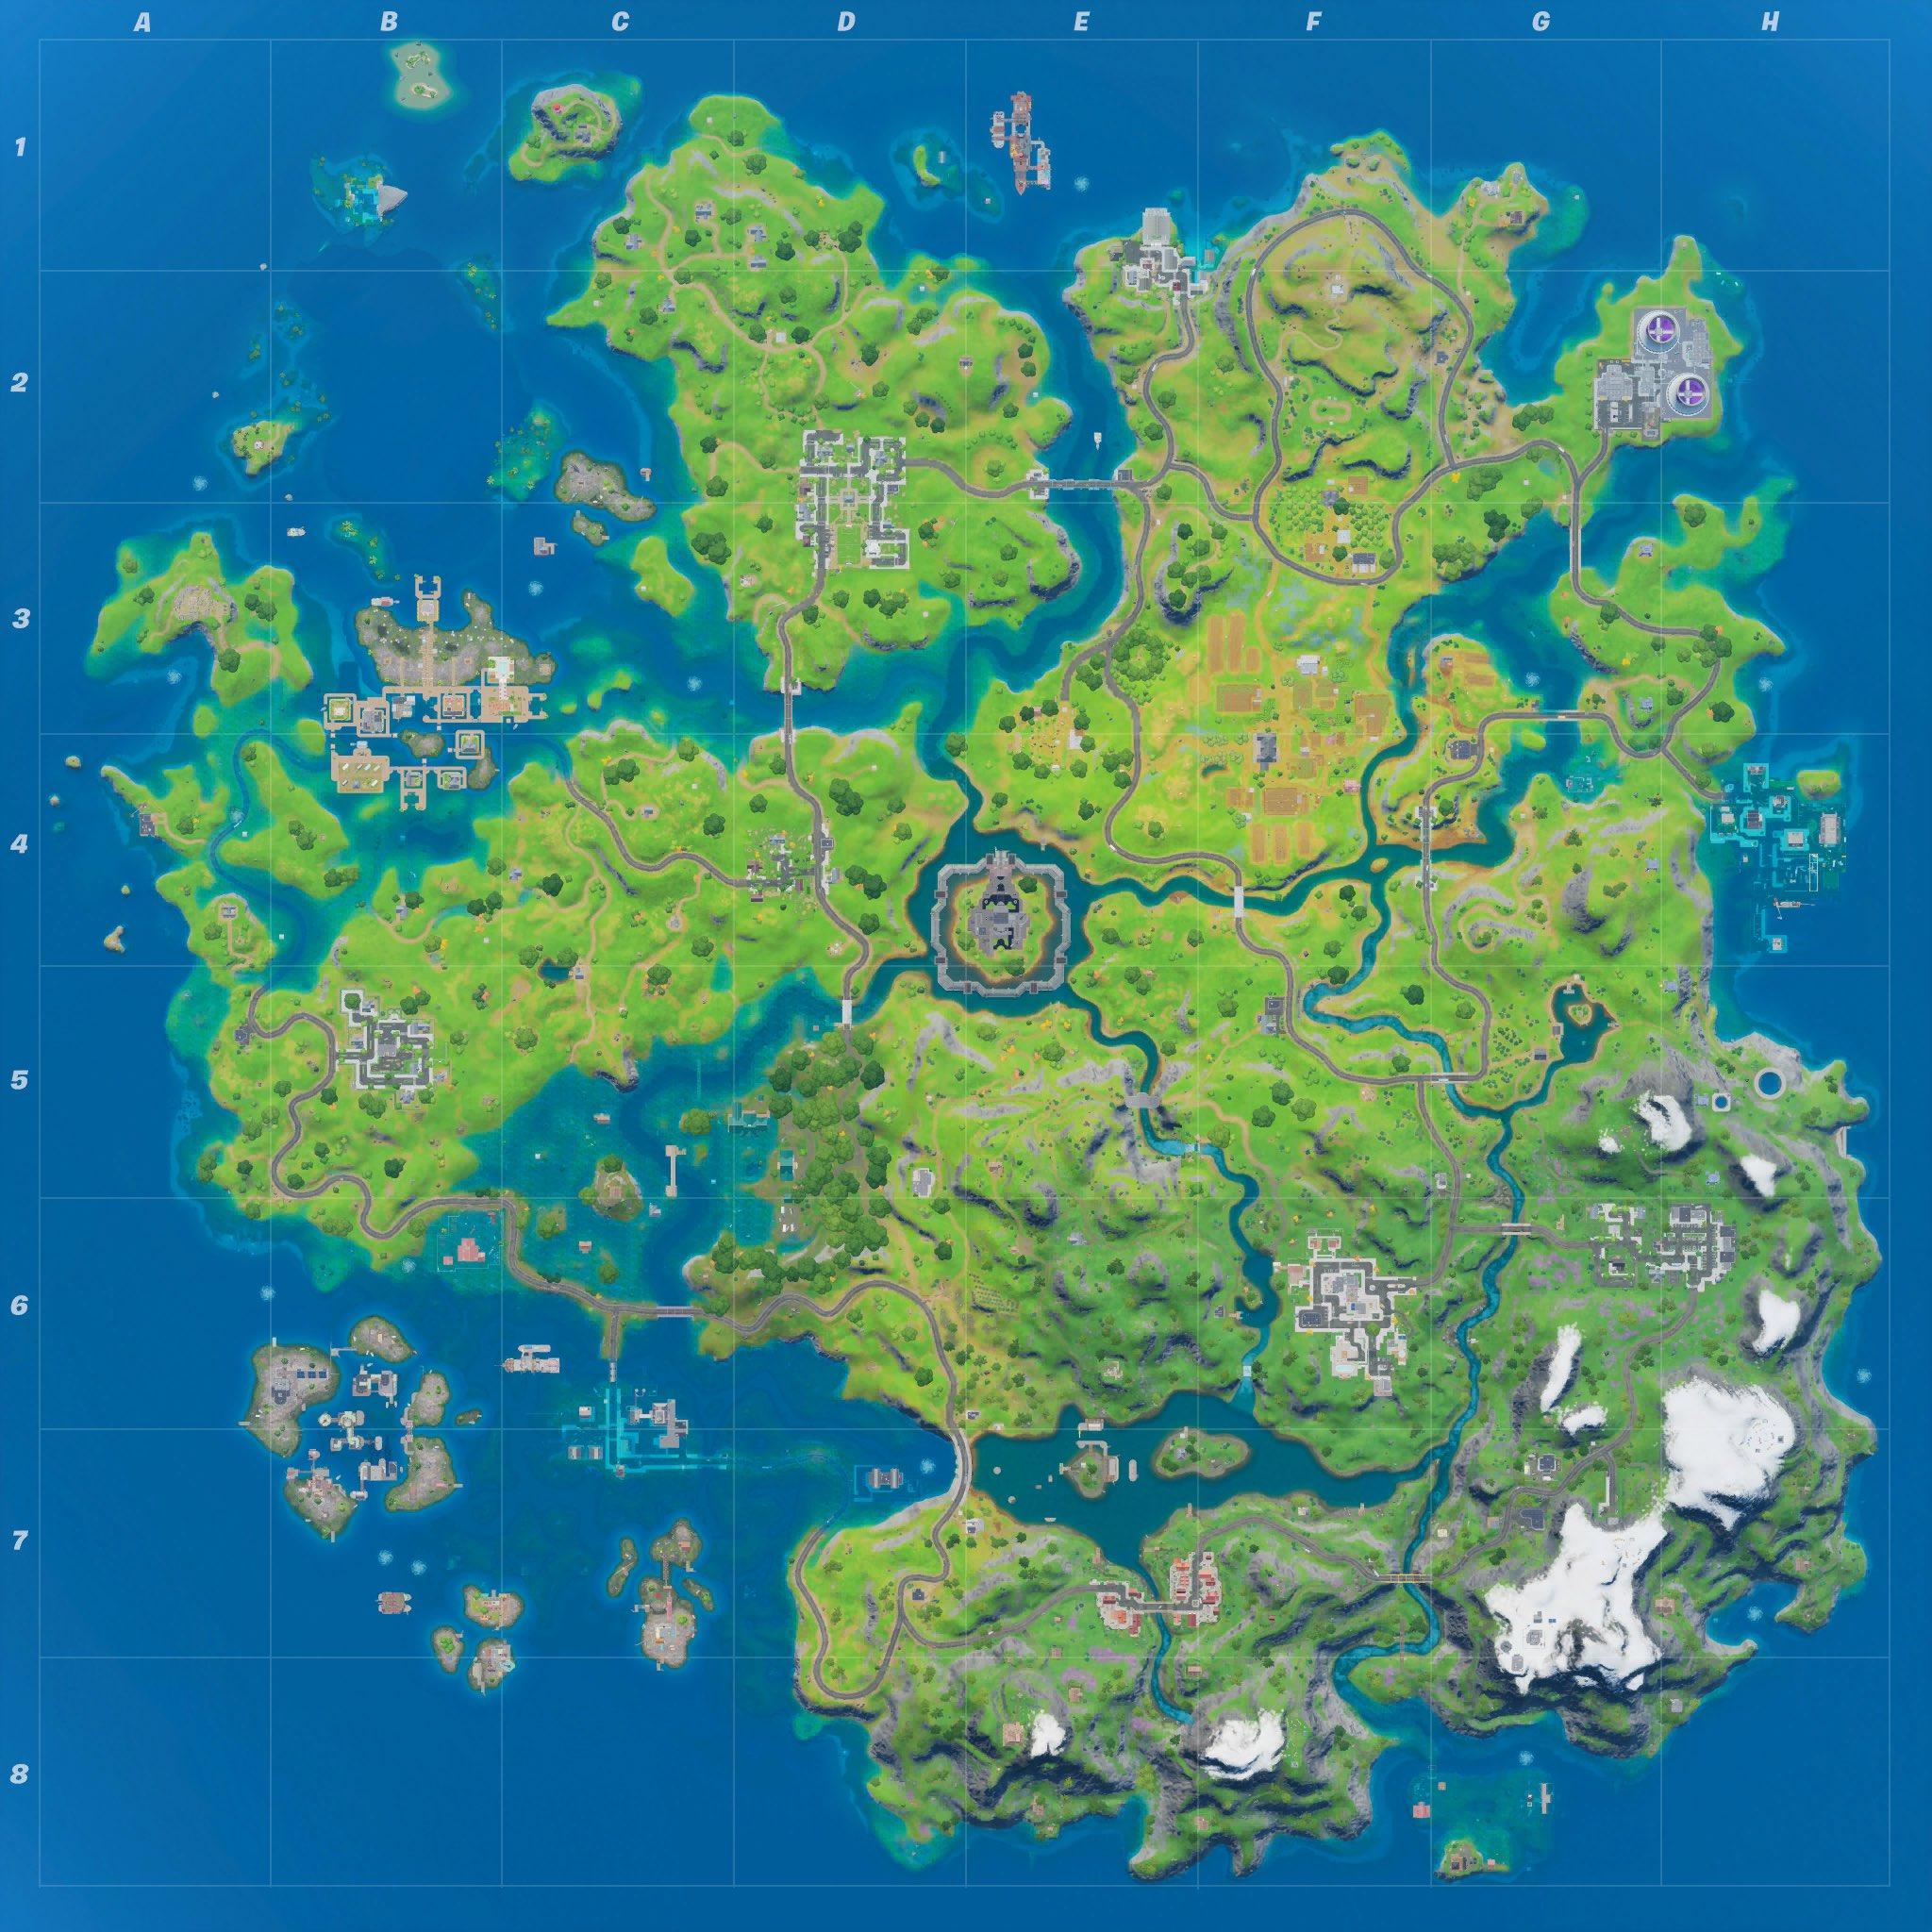 A screenshot of the Fortnite map.